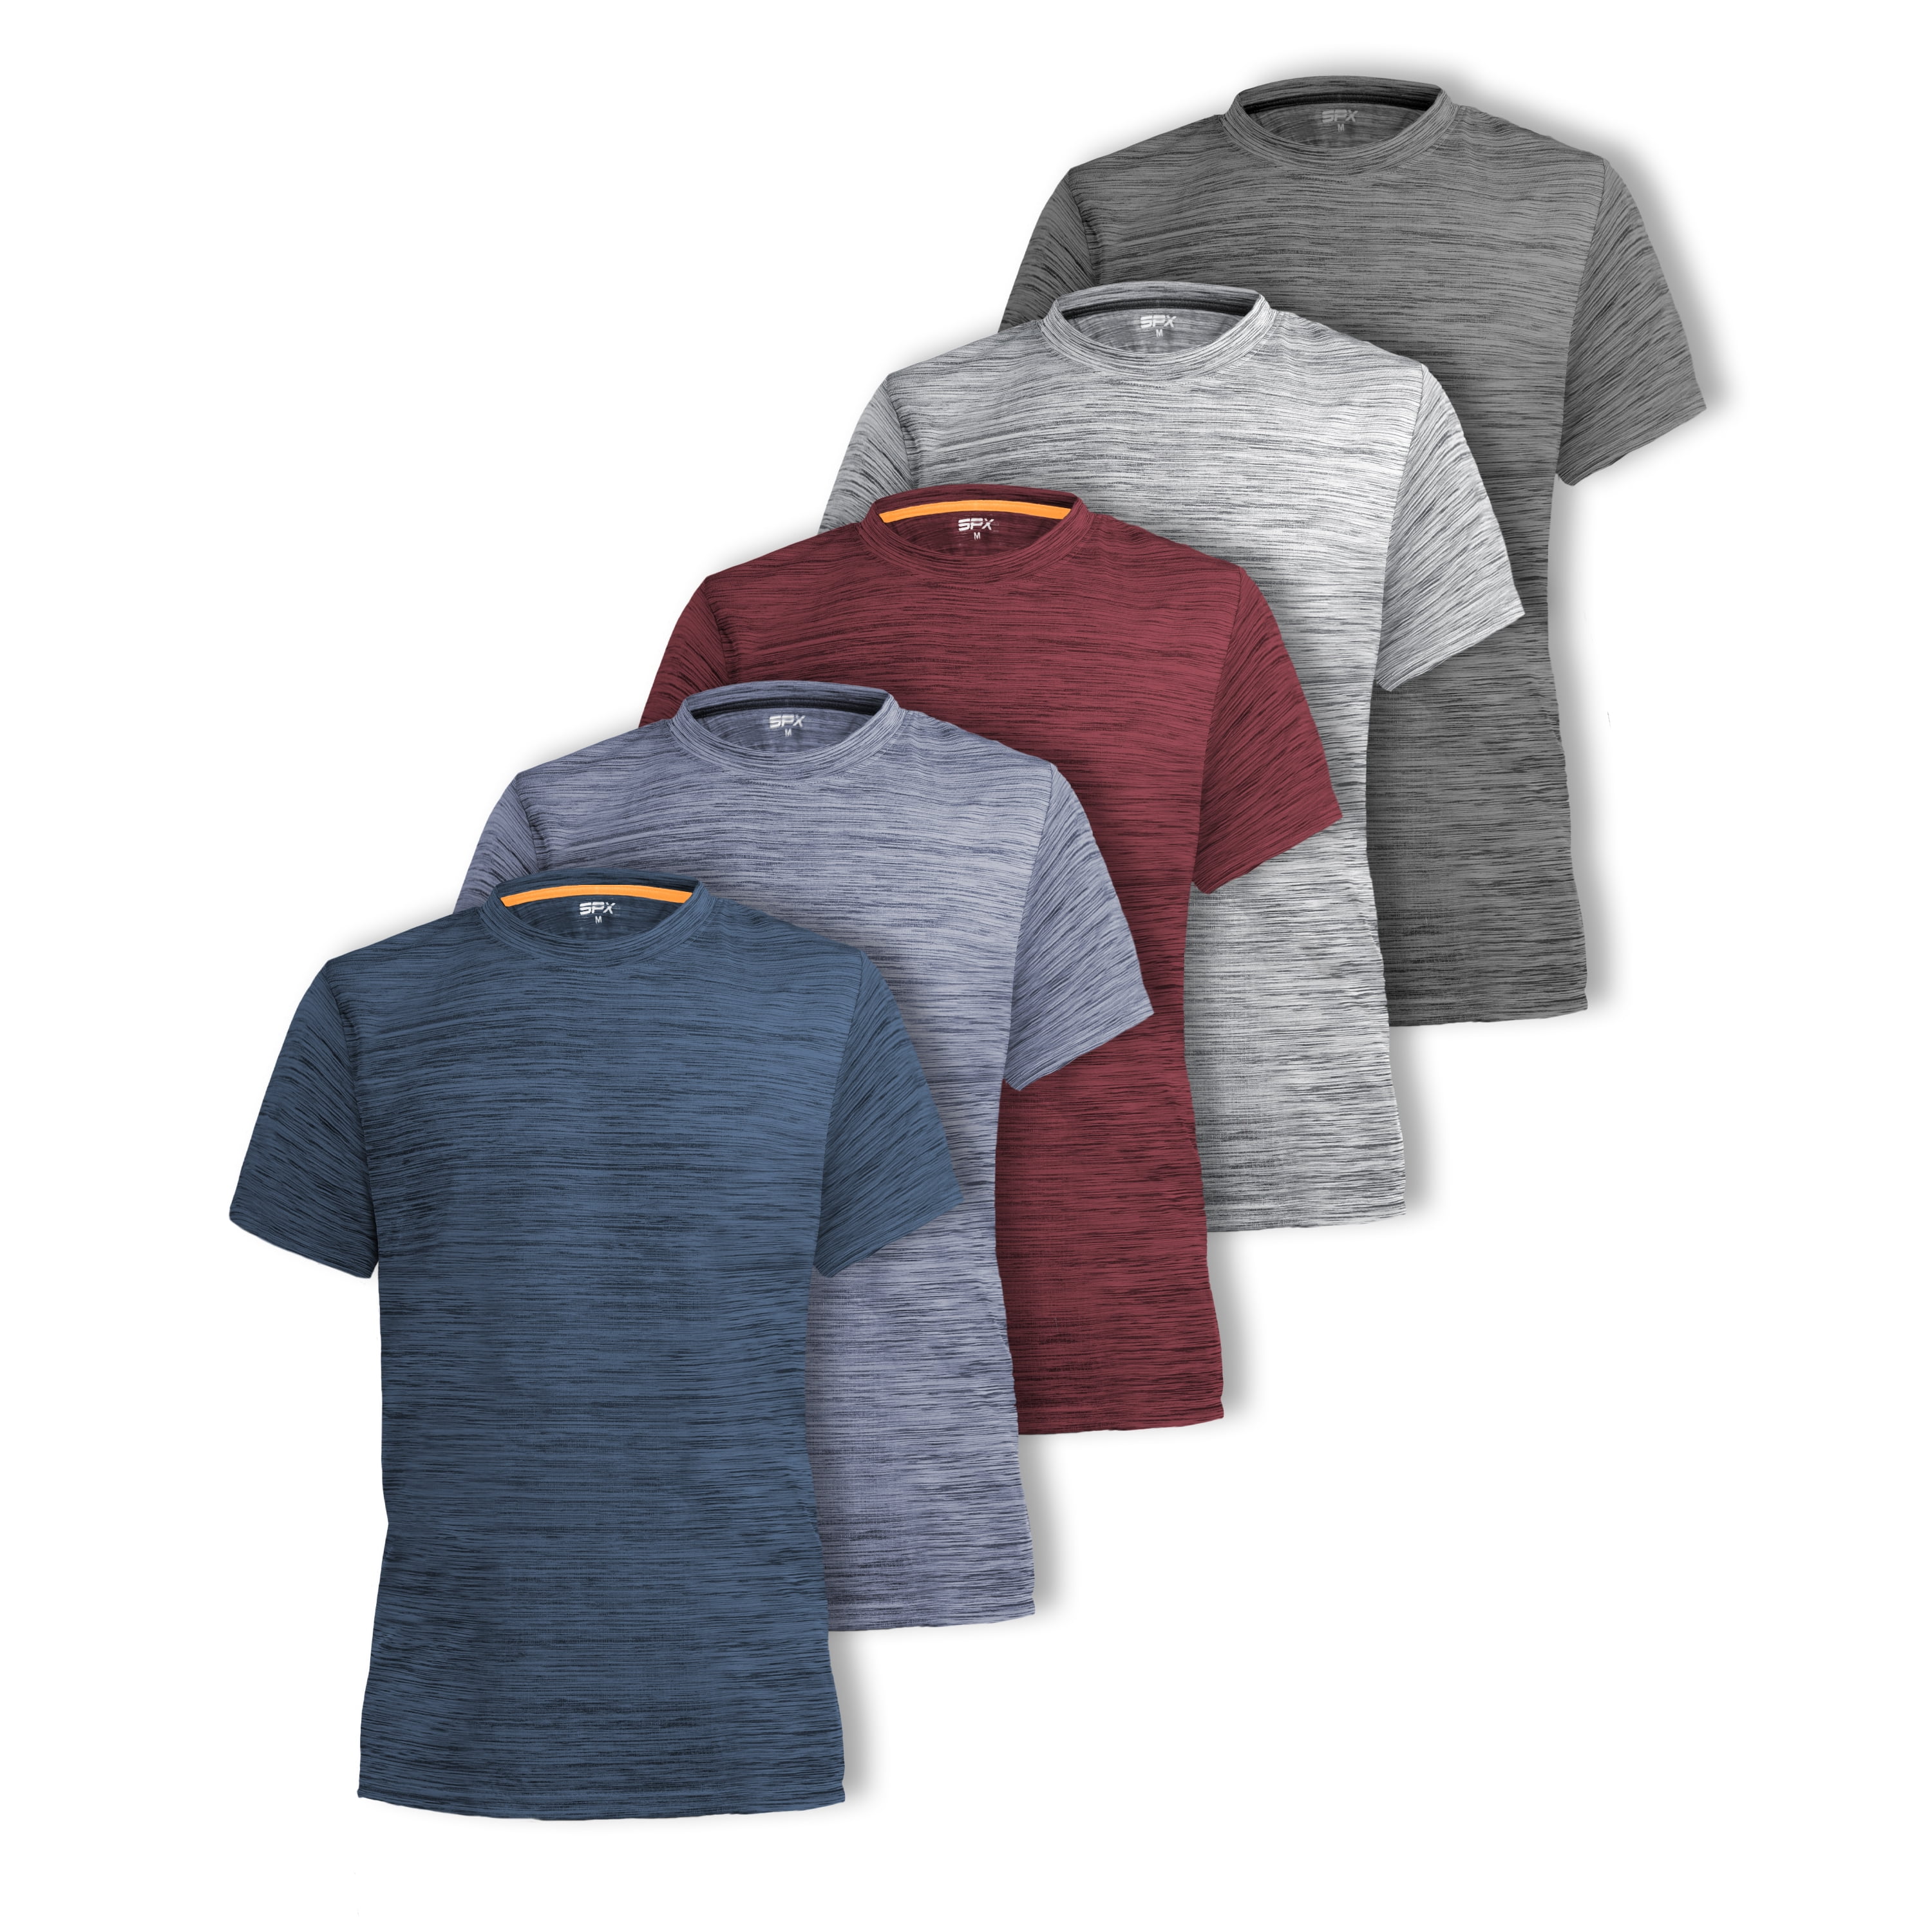 XGC Mens Sport T-Shirt Quick Dry Short Sleeve Training Fitness Tee Shirt 1 to 4 Pack 